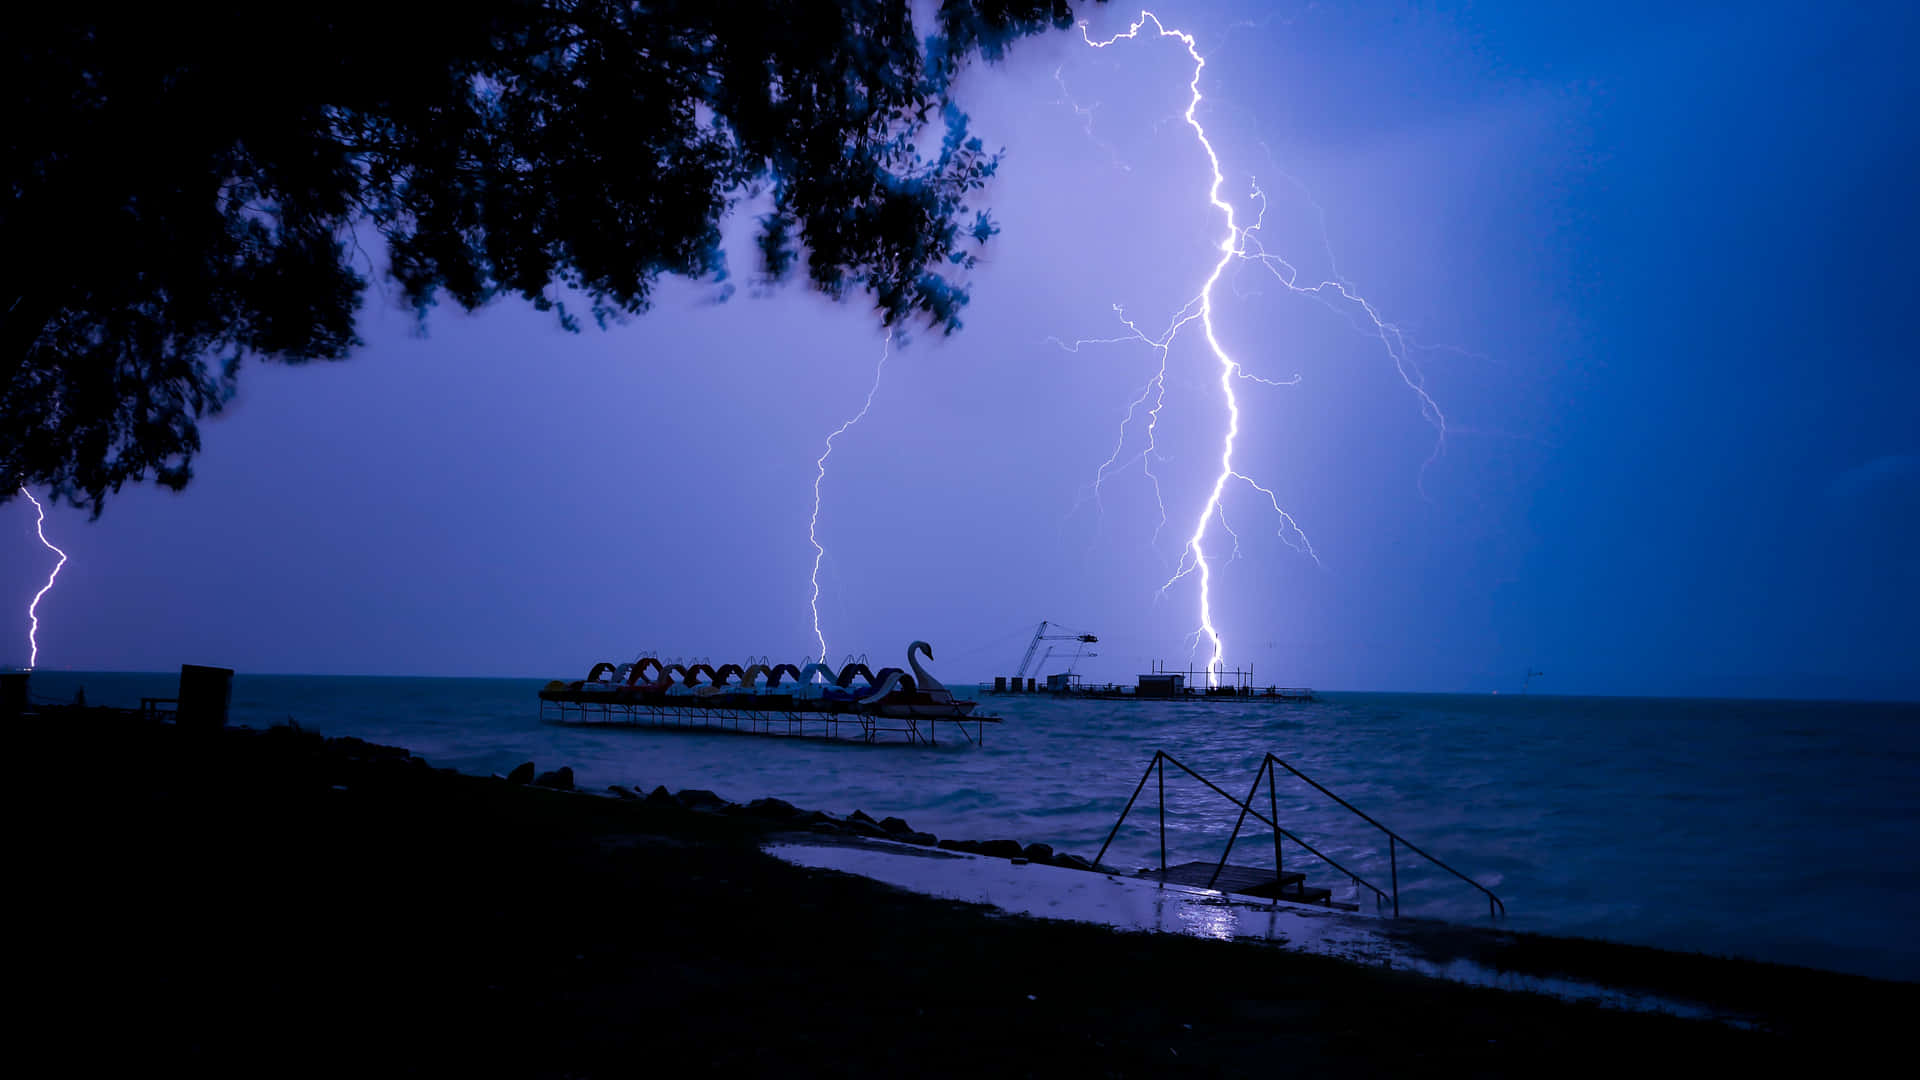 A striking blue lightning bolt against an indigo sky